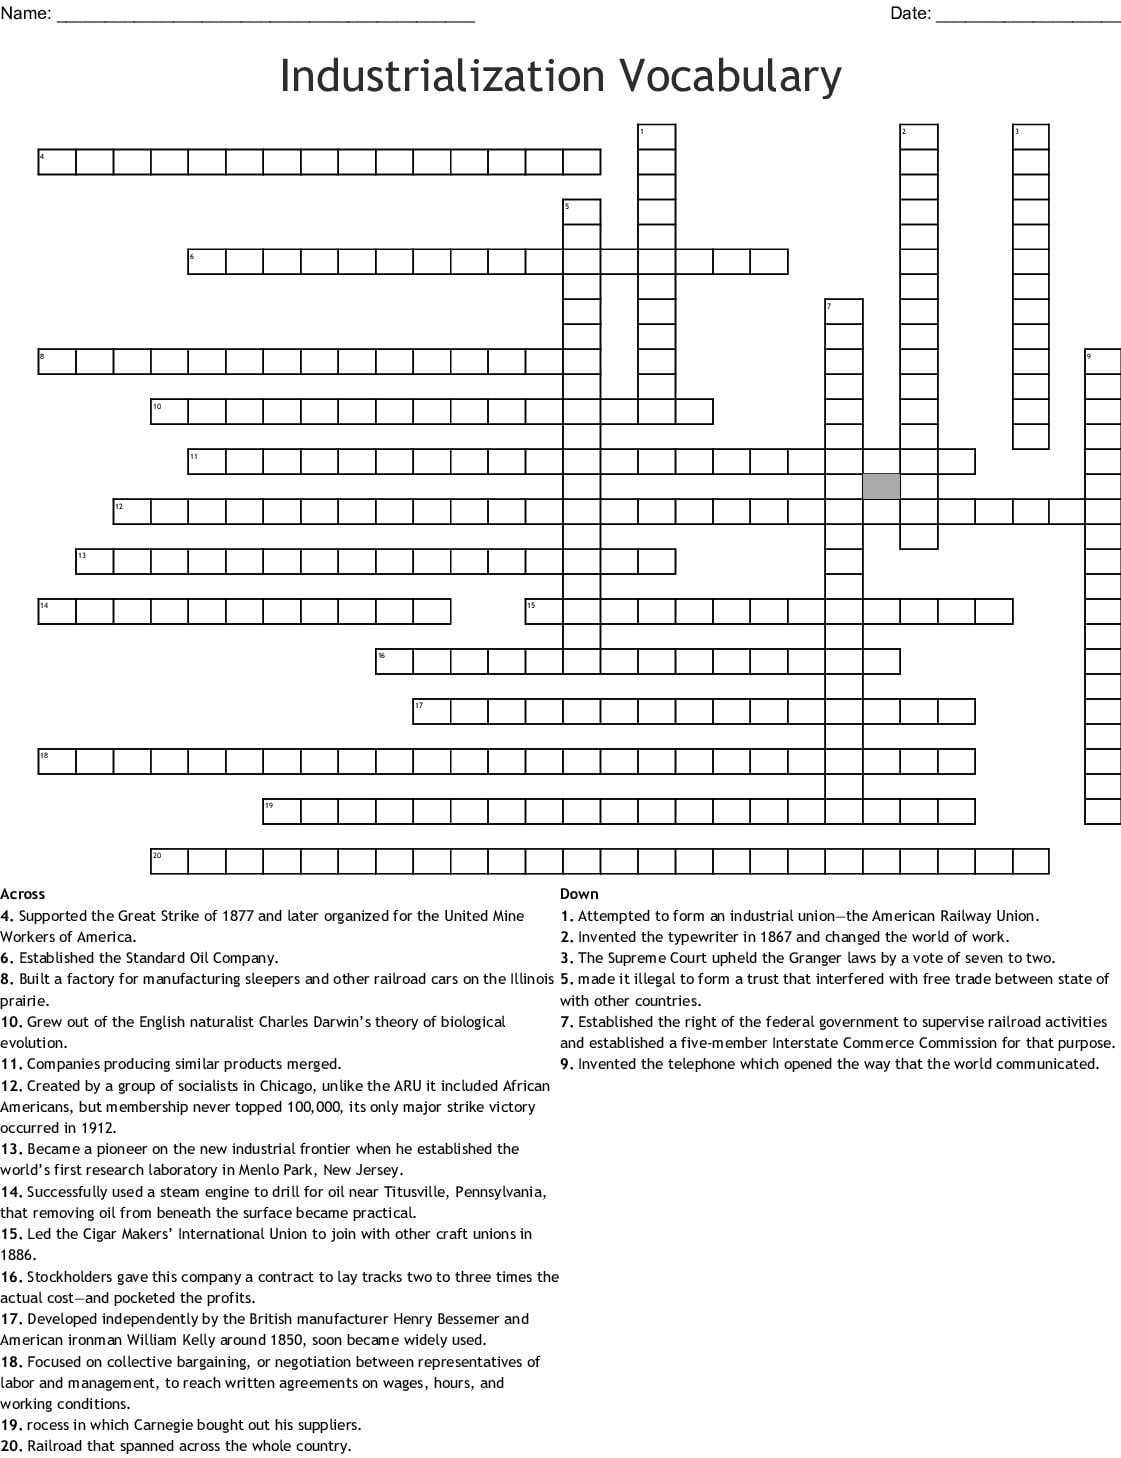 Industrialization Vocabulary Crossword  Wordmint Inside Industrialization Vocabulary Worksheet